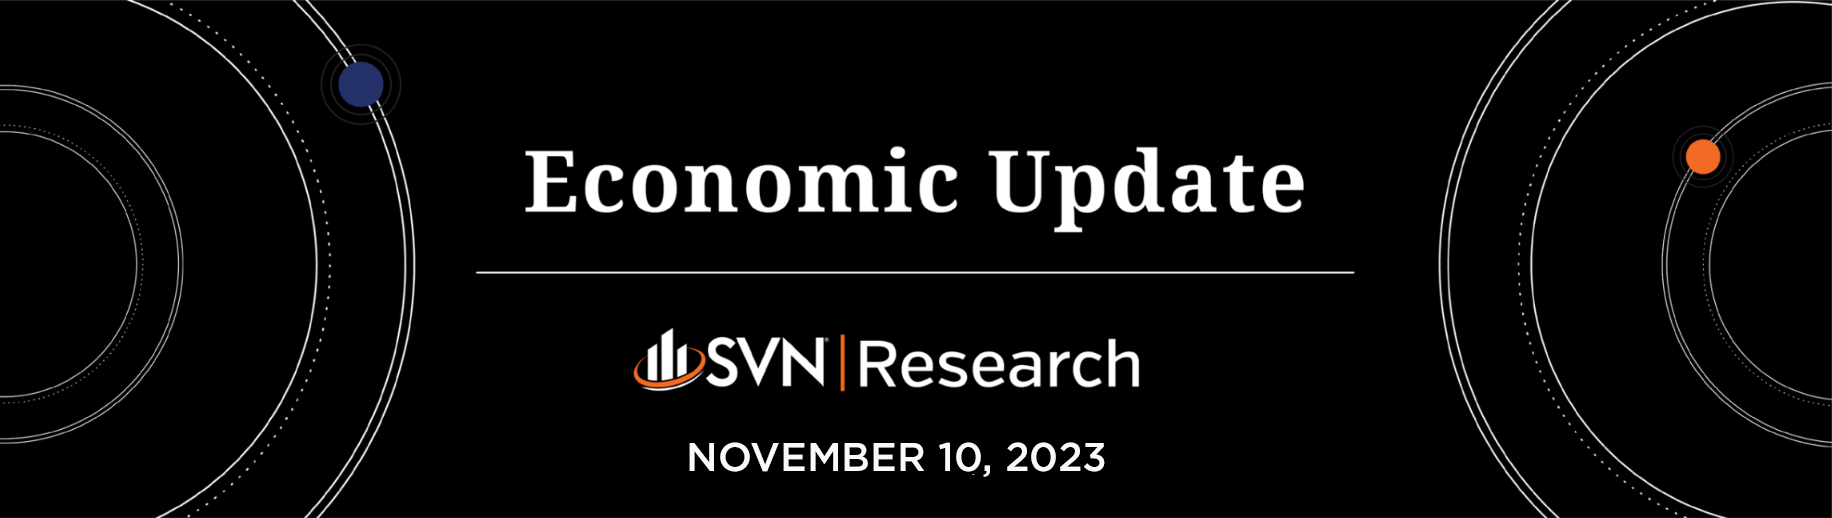 SVN | Research Economic Update 11.10.2023